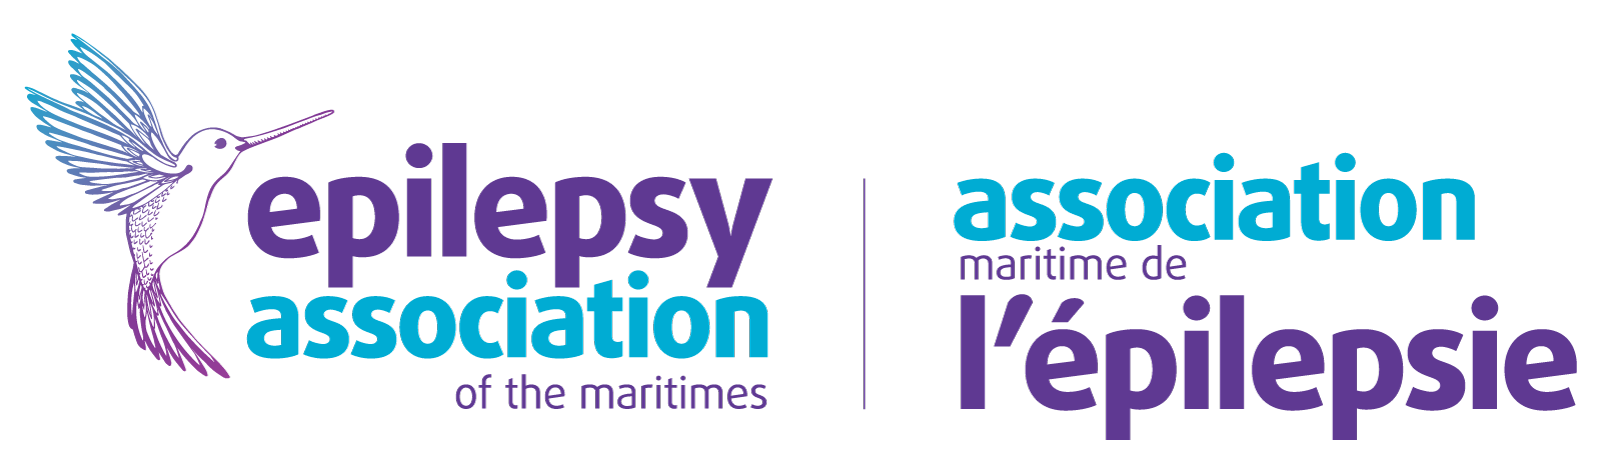 THE EPILEPSY ASSOCIATION OF THE MARITIMES logo